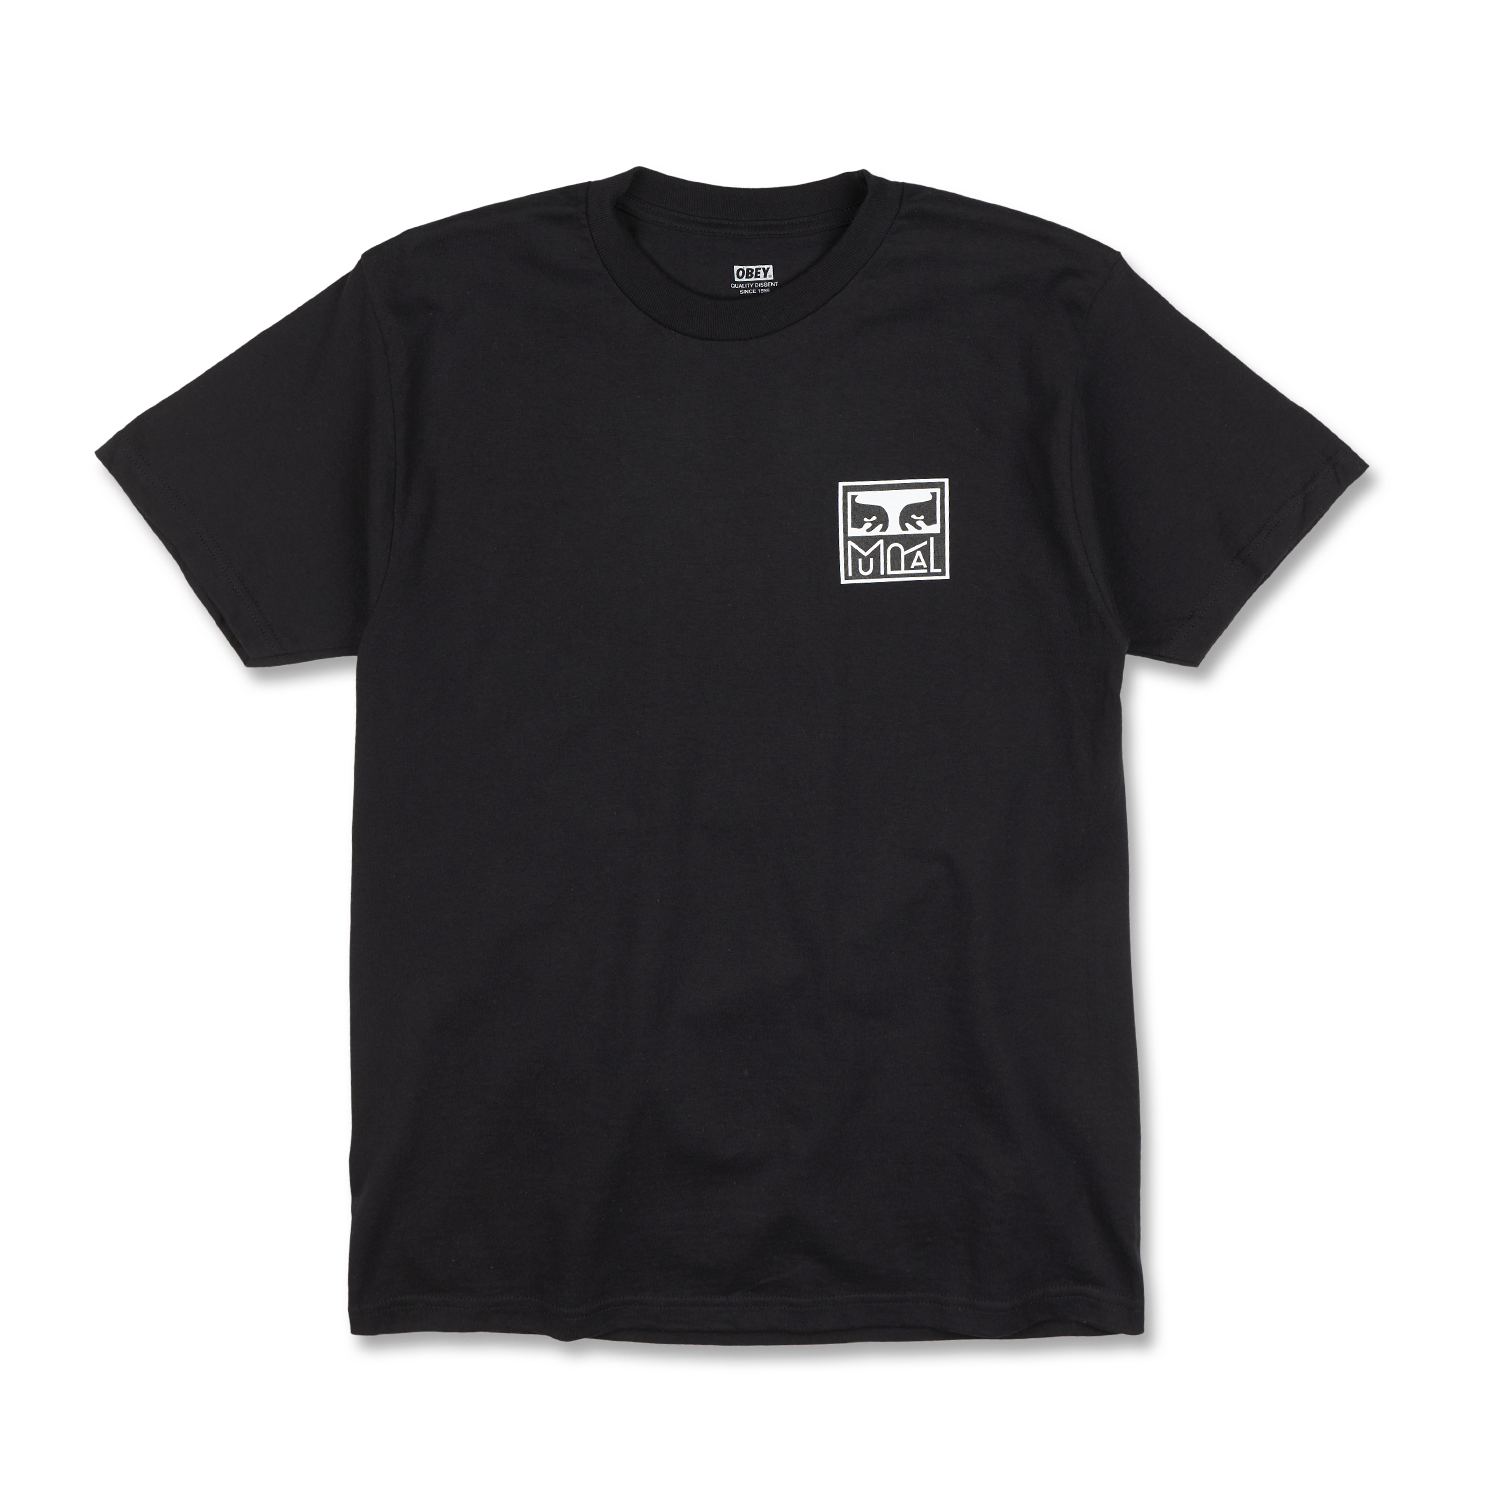 MURAL x OBEY Logo T-Shirt - Black